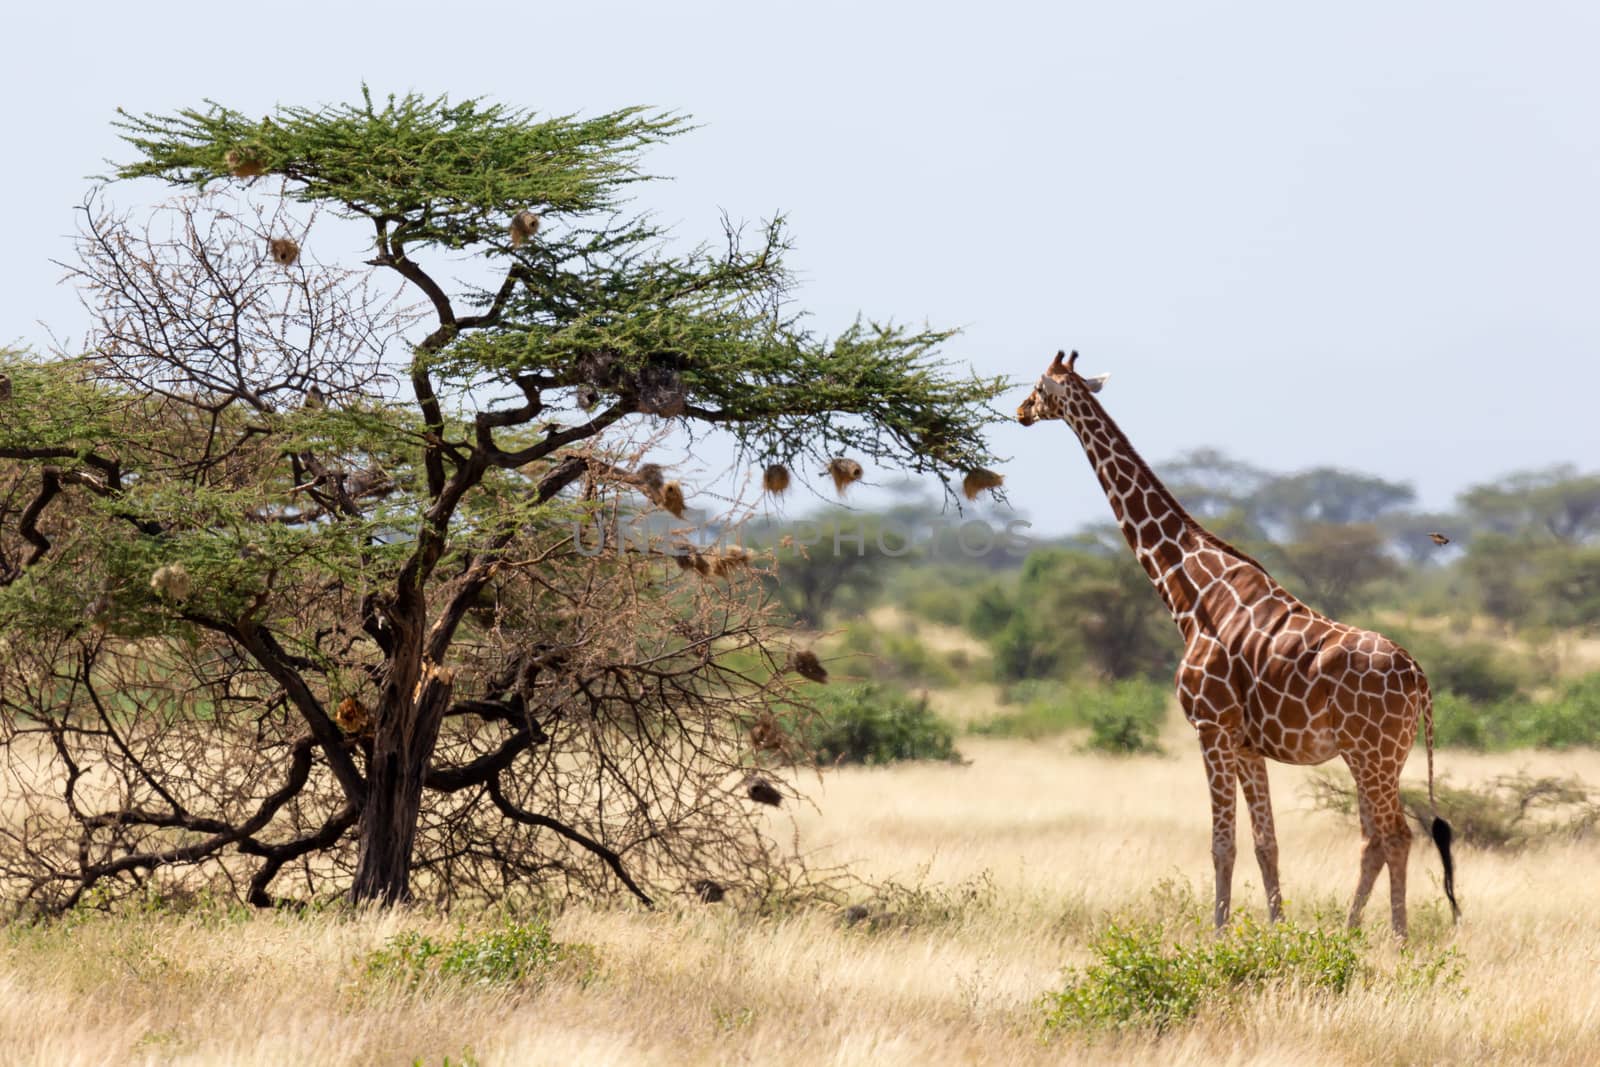 A Somalia giraffes eat the leaves of acacia trees